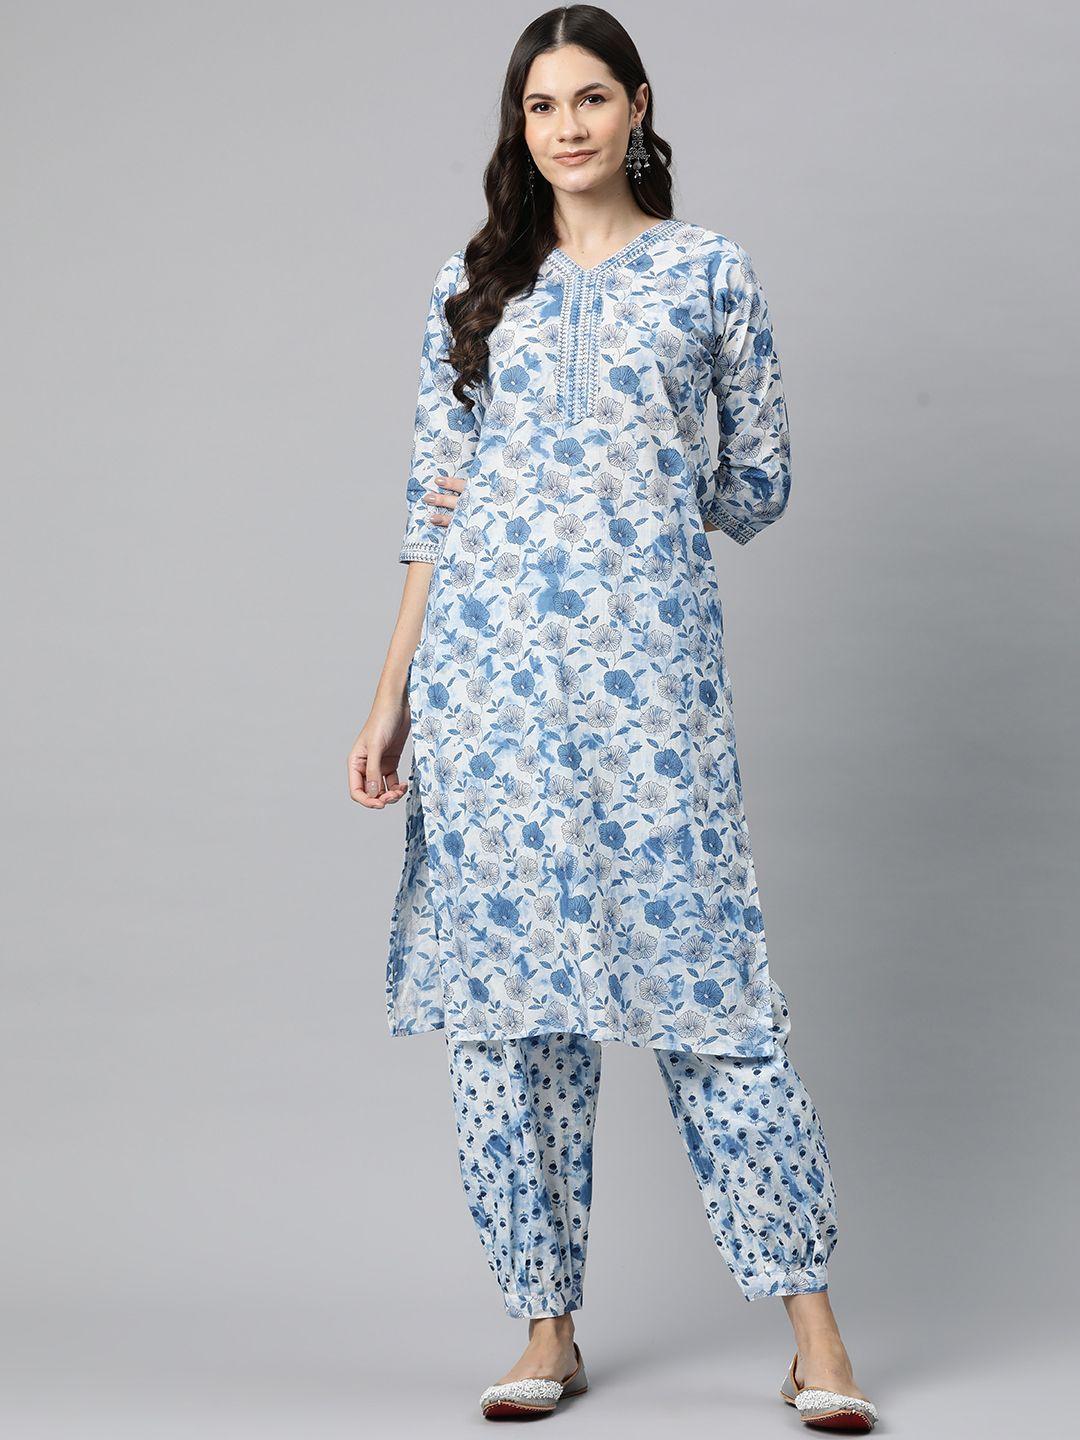 readiprint fashions floral printed regular pure cotton kurta with salwar